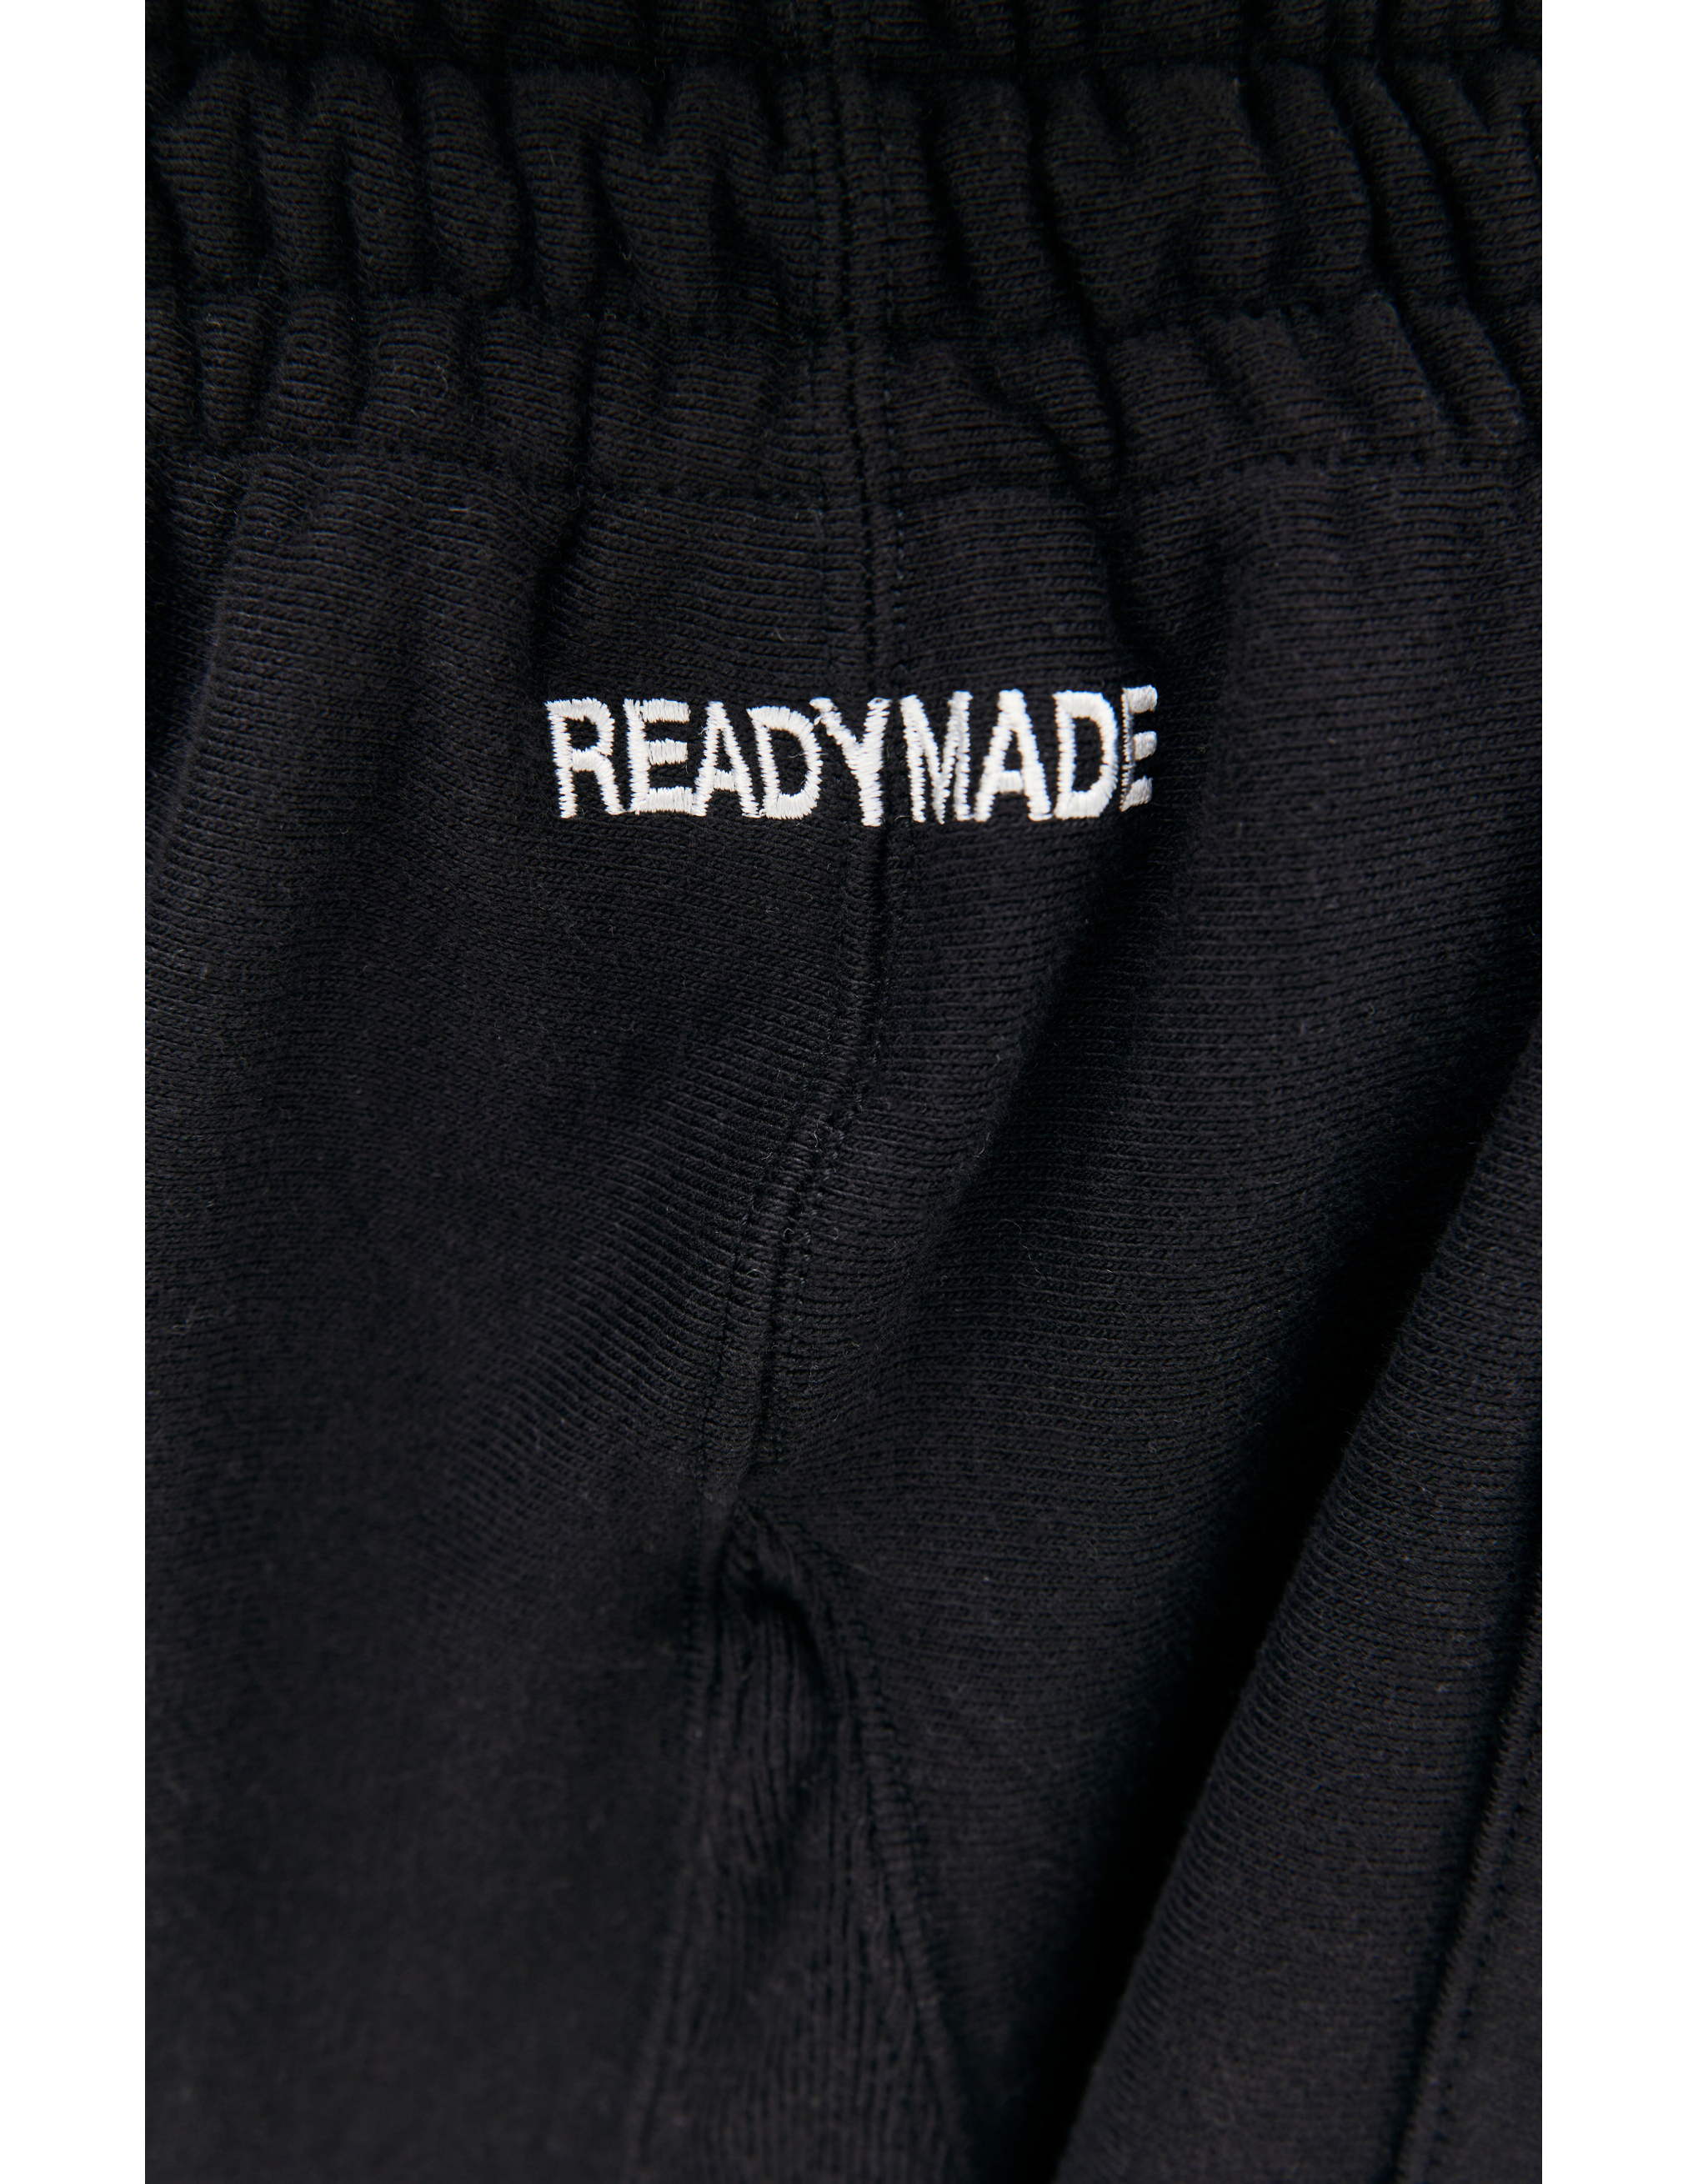 Shop Readymade Black Cotton Sweat Pants